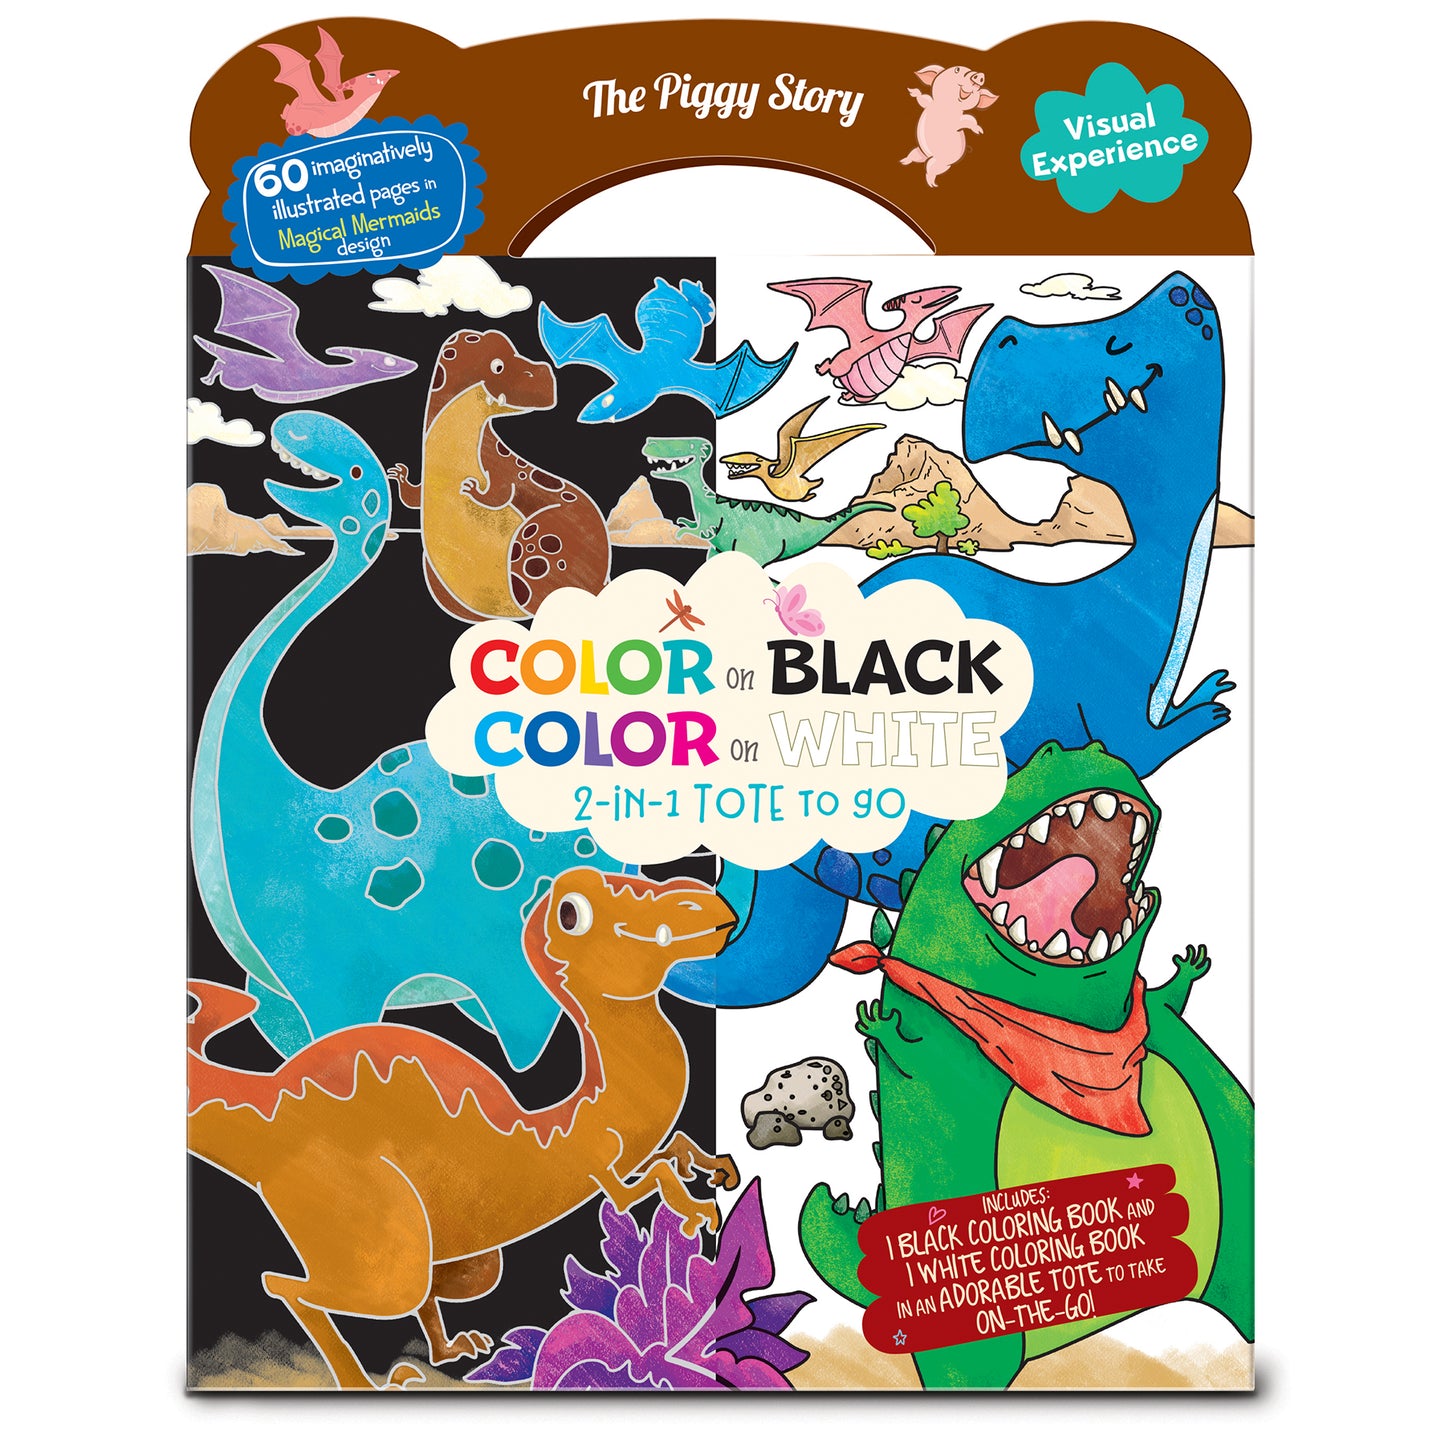 Color on Black, Color on White Tote - Dinosaur